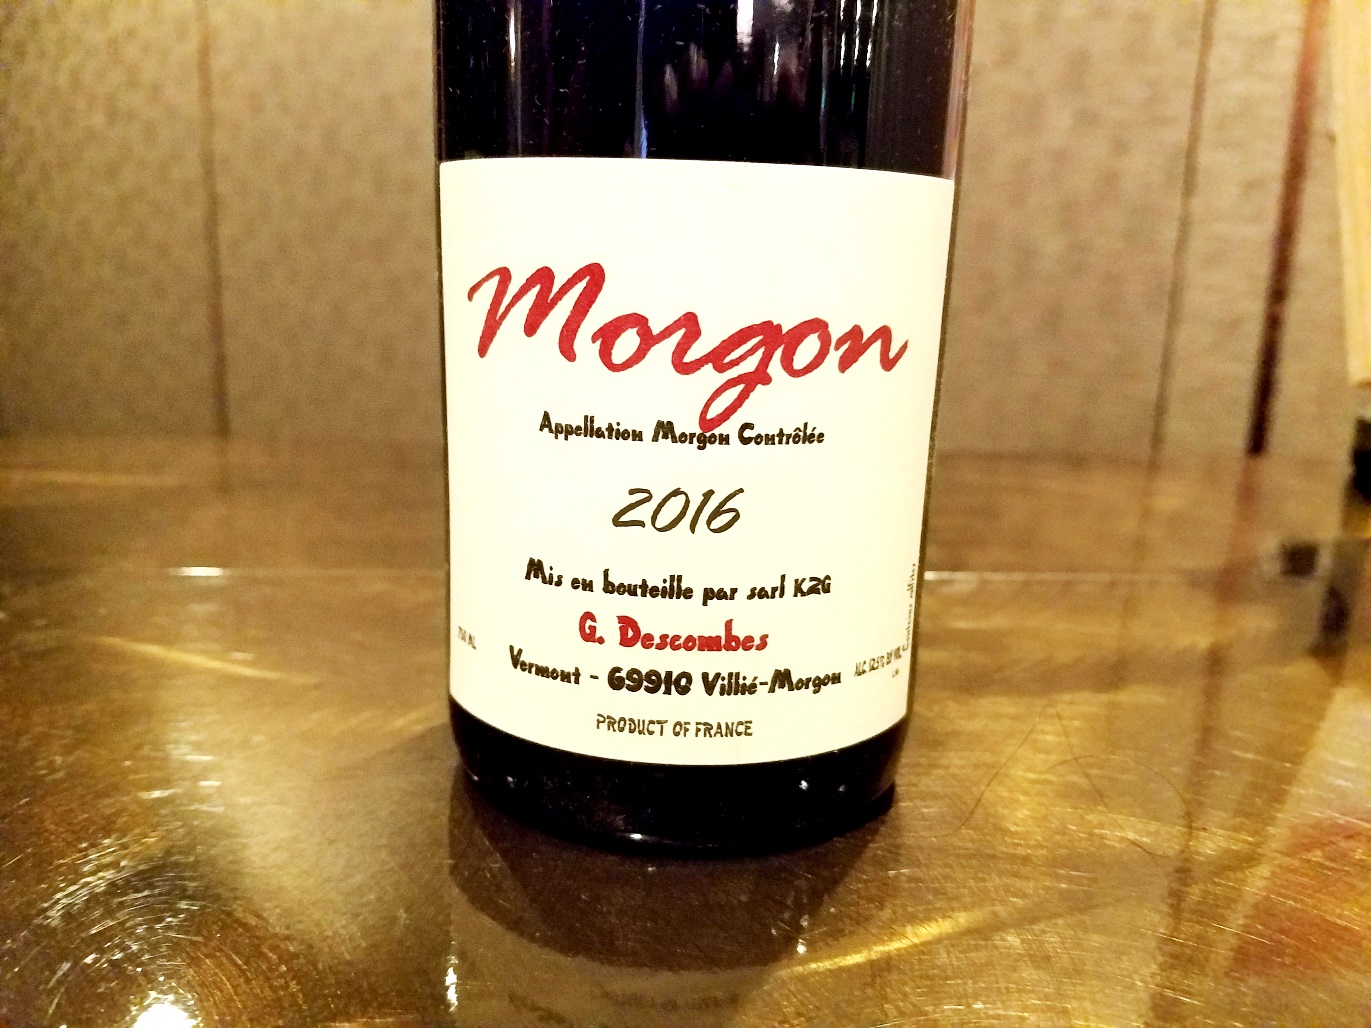 George Descombes, Morgon 2016, Beaujolais, France, Wine Casual